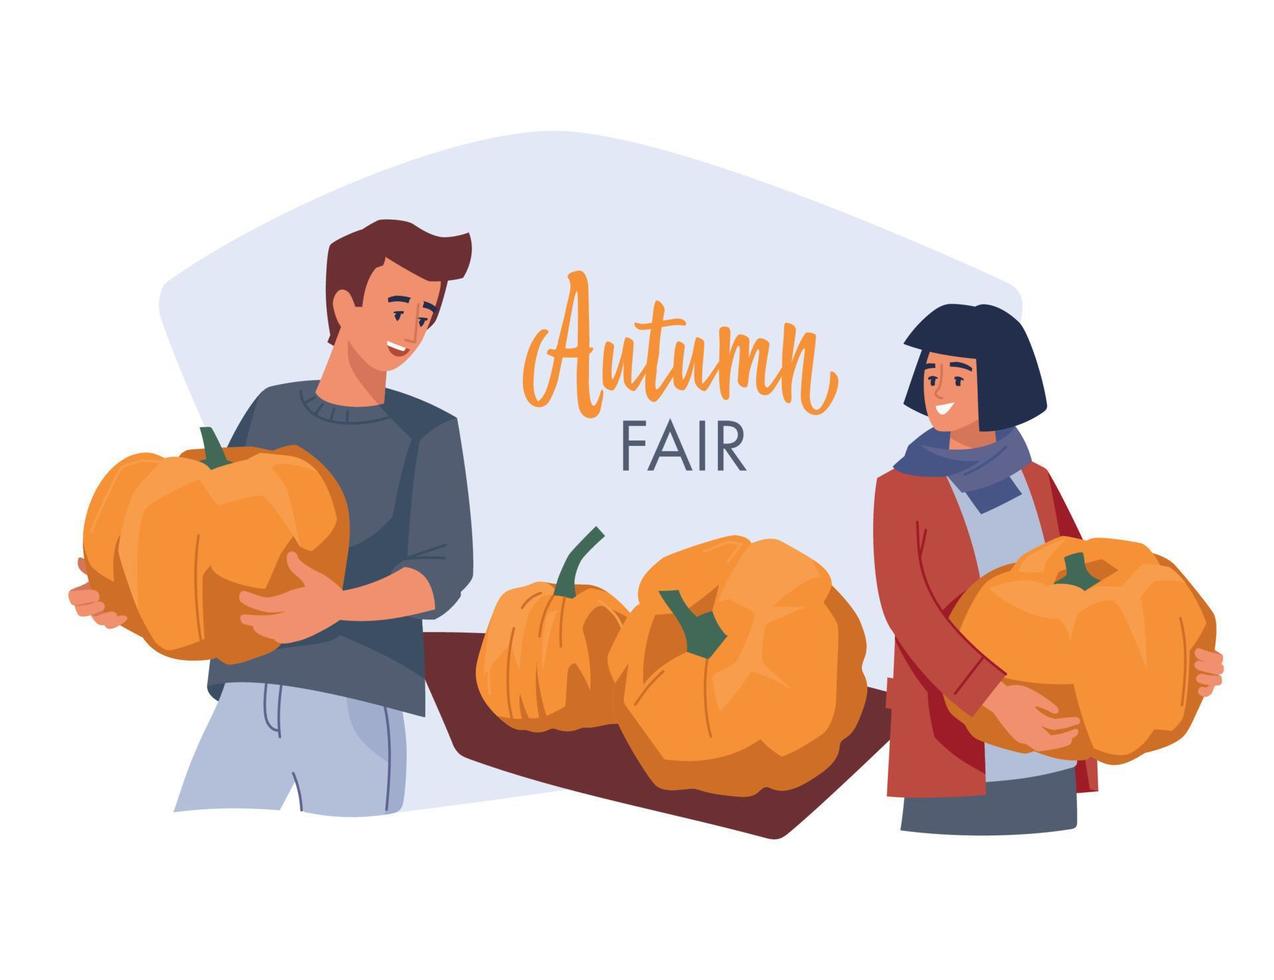 Autumn fair. Man and woman with pumpkins. Vector image.